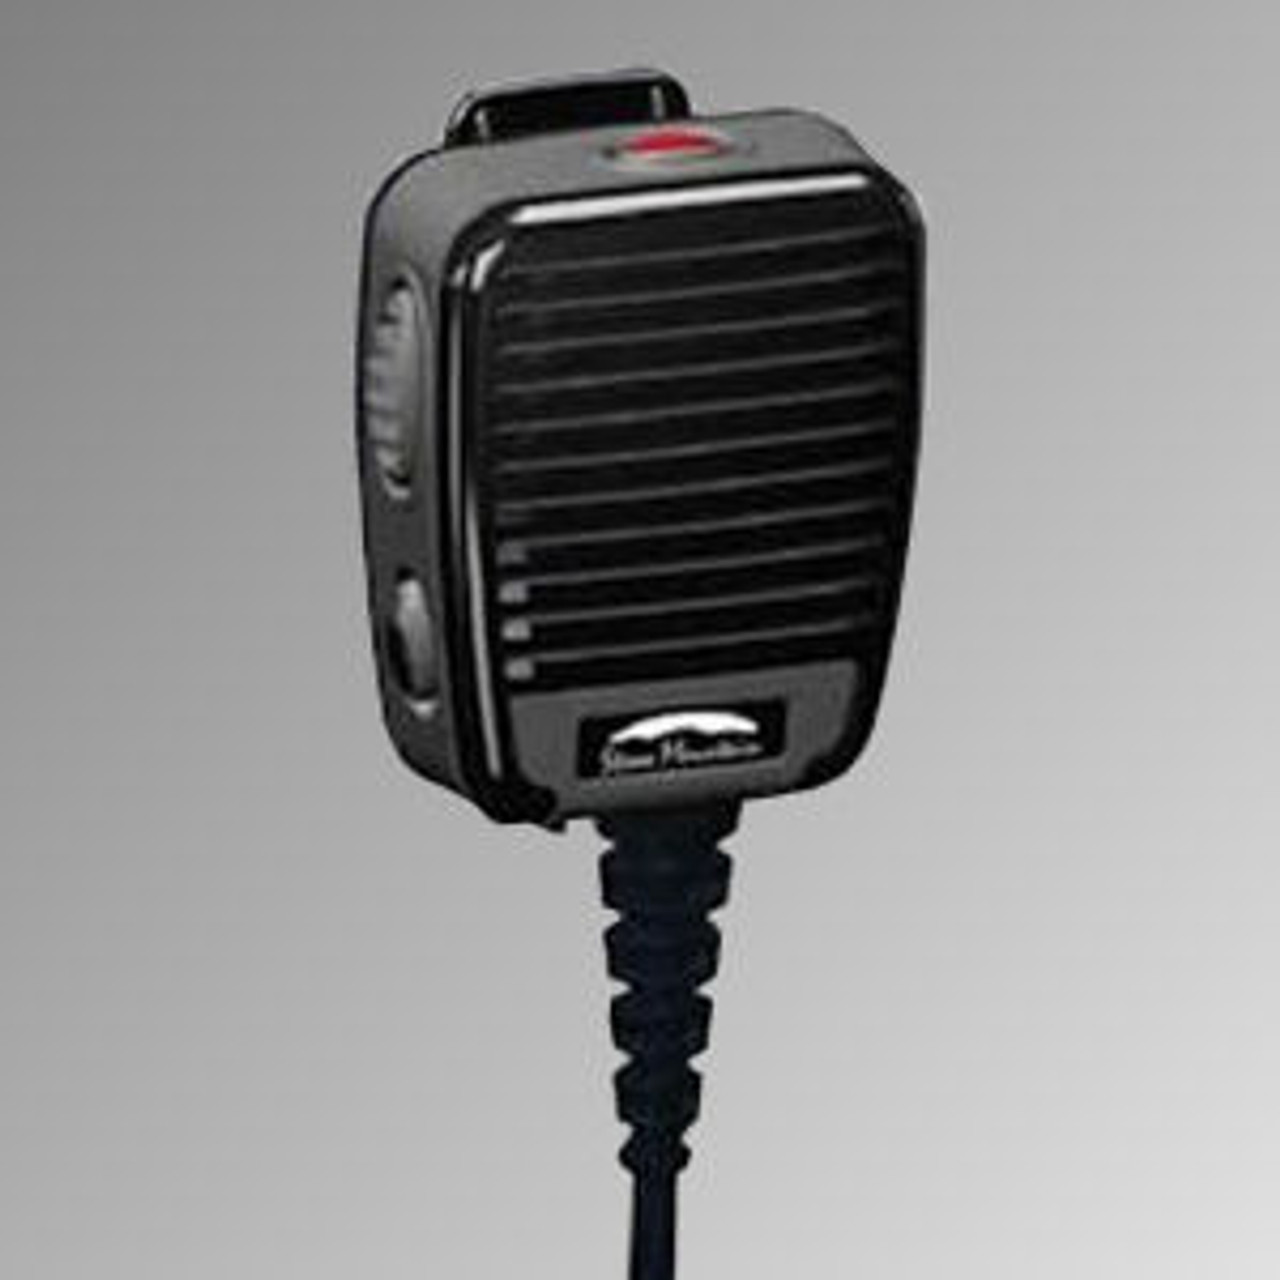 M/A-Com P7370 Noise Canceling Ruggedized Waterproof IP68 High Volume Speaker Mic